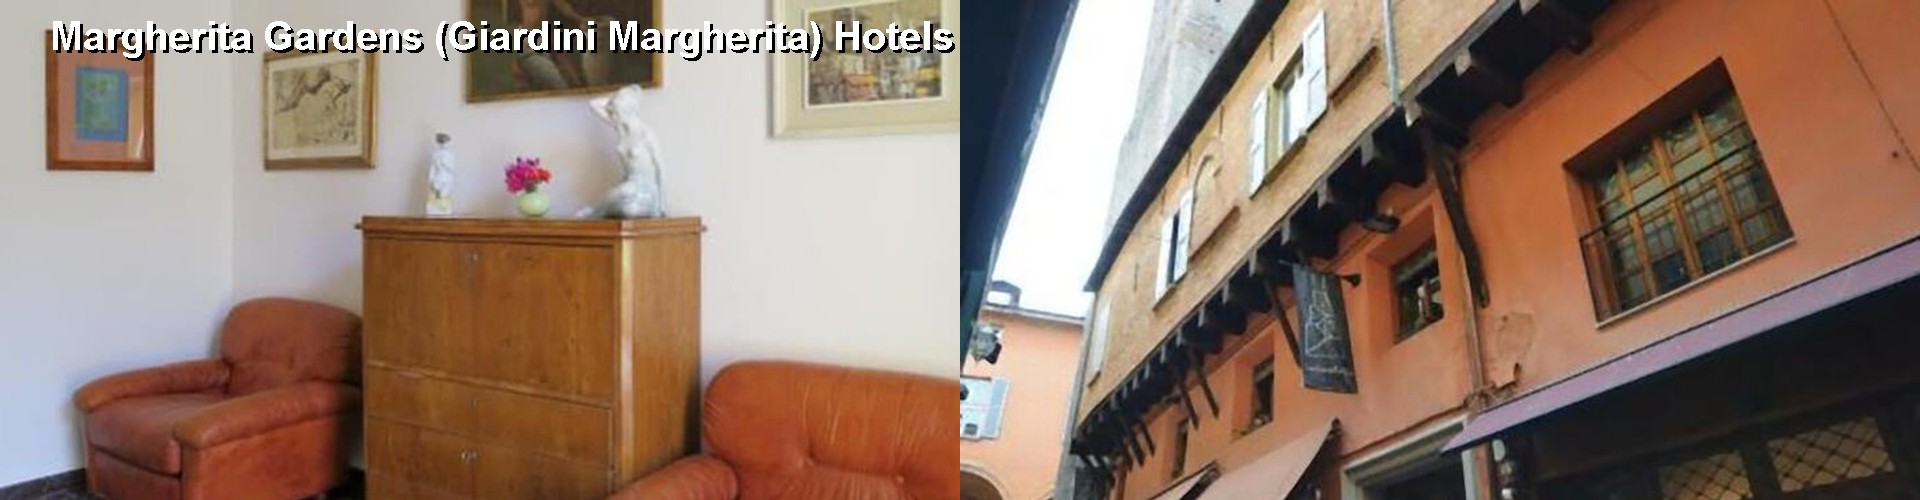 5 Best Hotels near Margherita Gardens (Giardini Margherita)